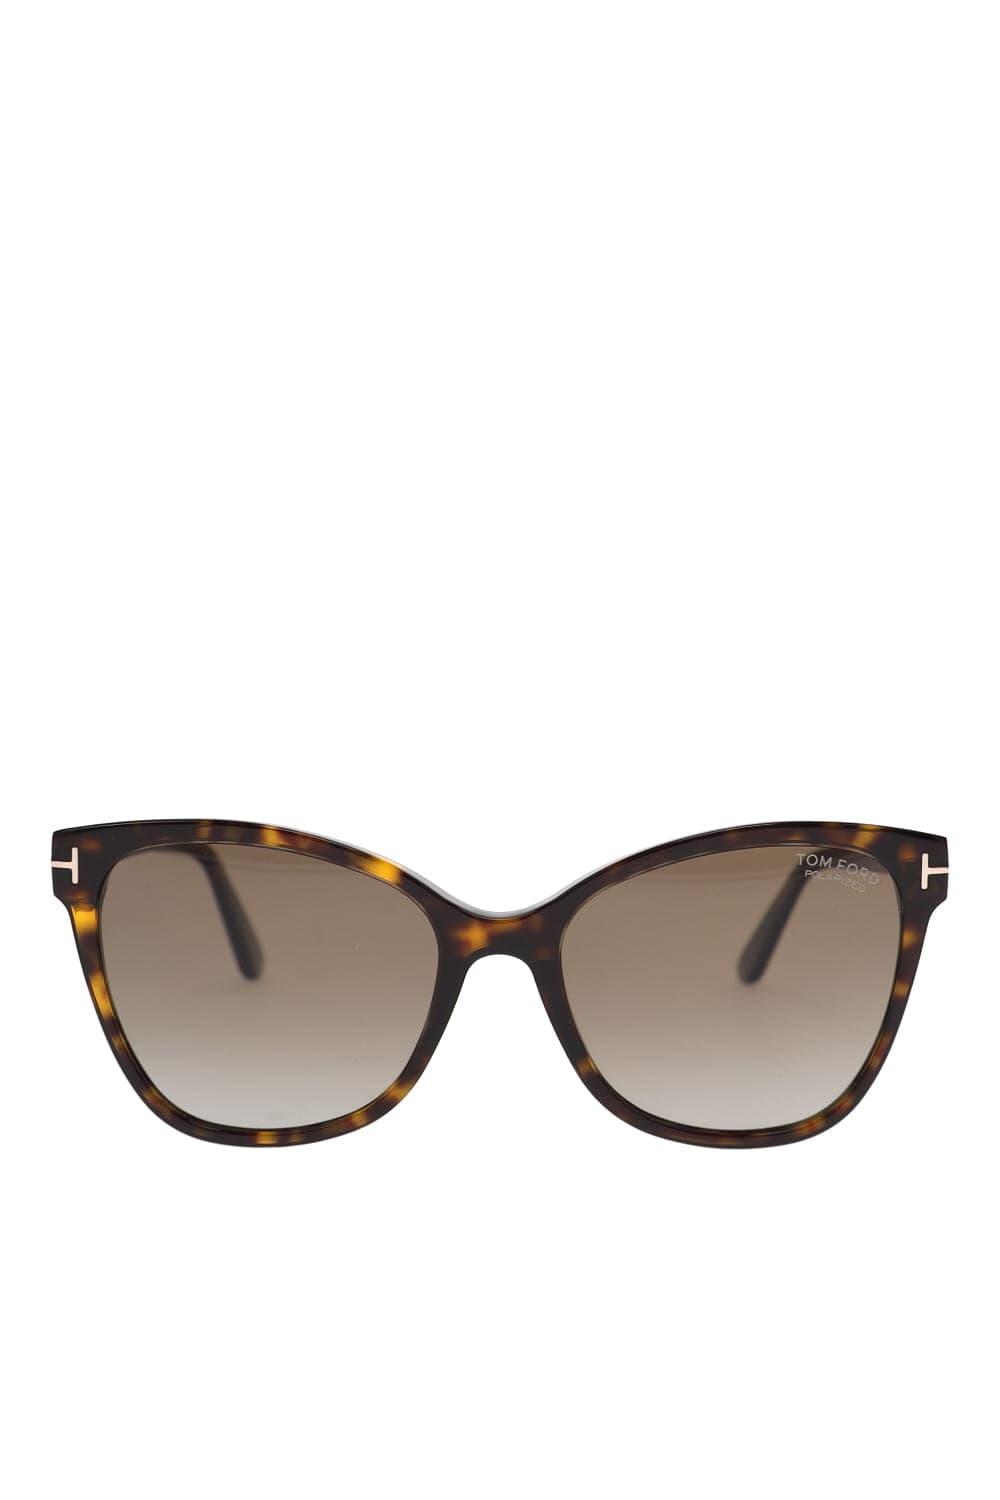 Tom Ford Eyewear FT0844 Classic Dark Havana Polarized Sunglasses FT0844 Havana/Brown